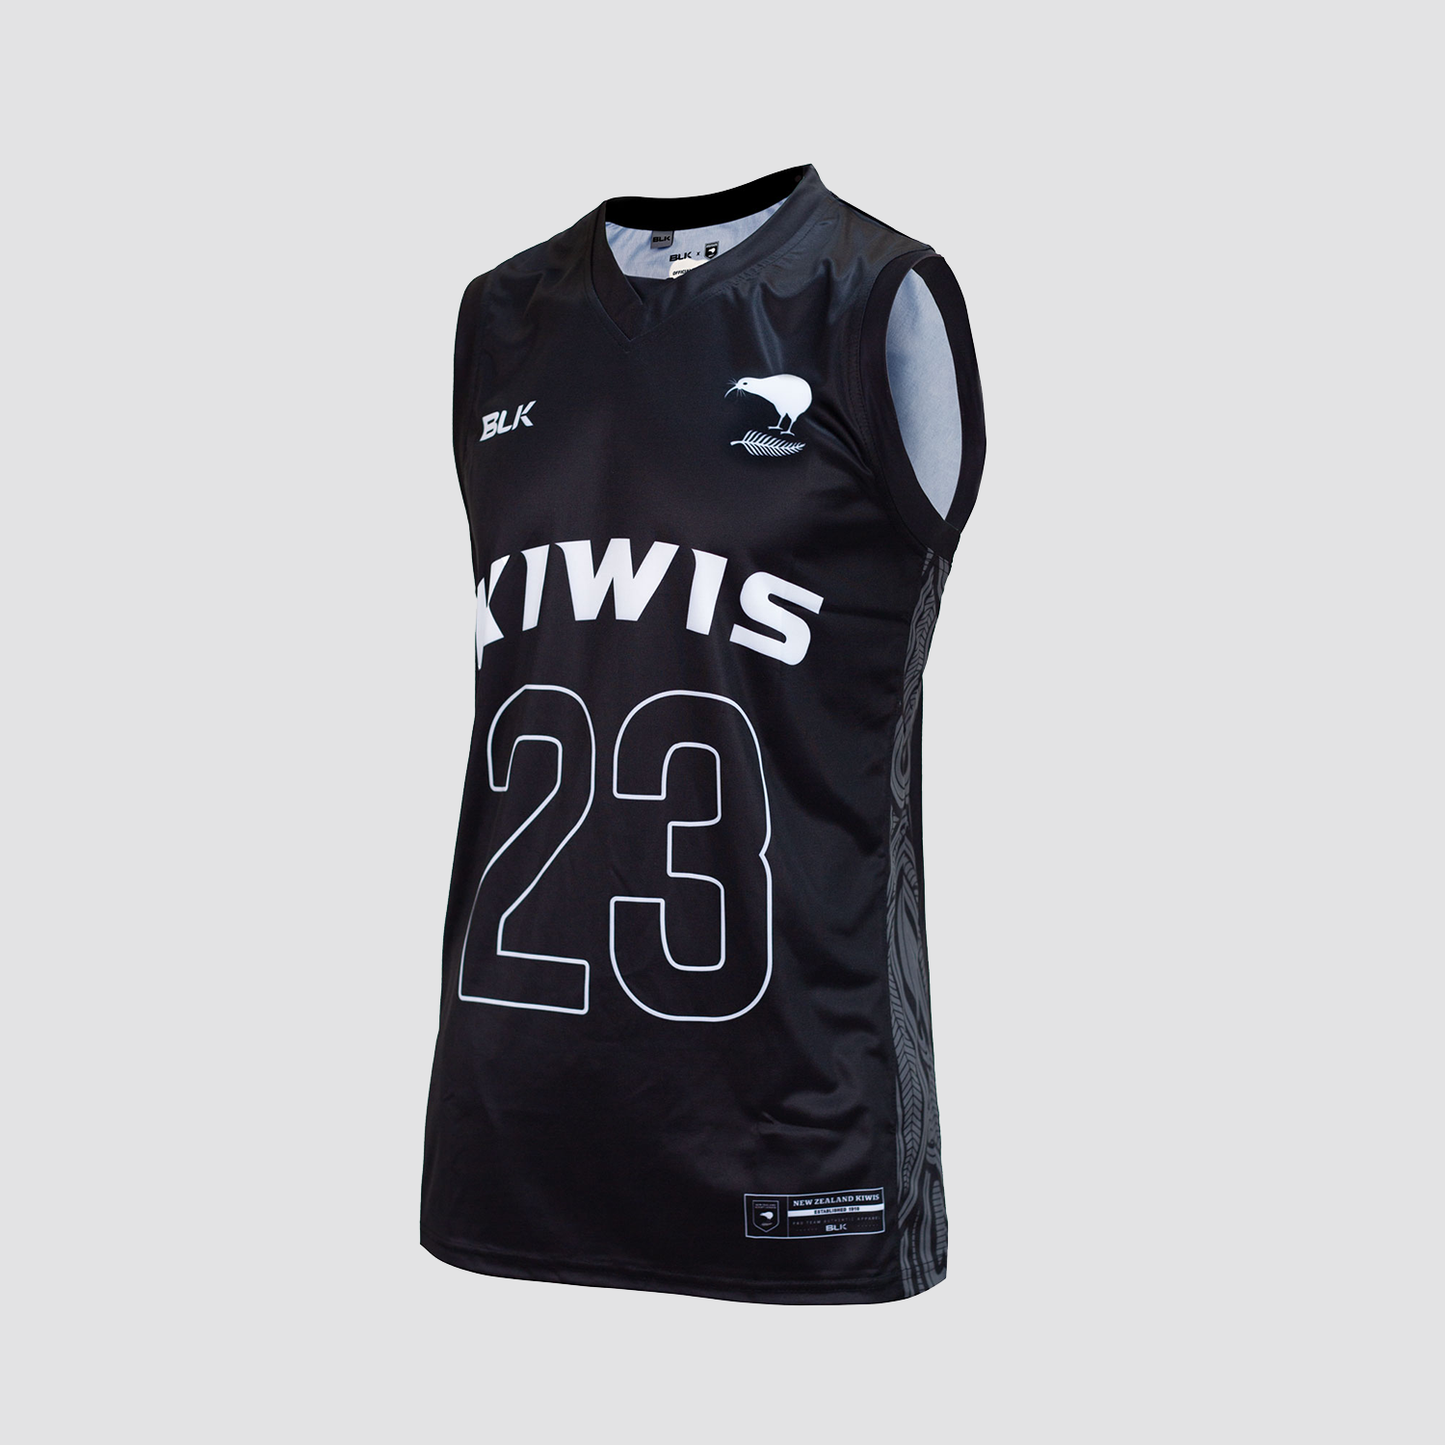 NZ Kiwis Basketball Singlet Mens